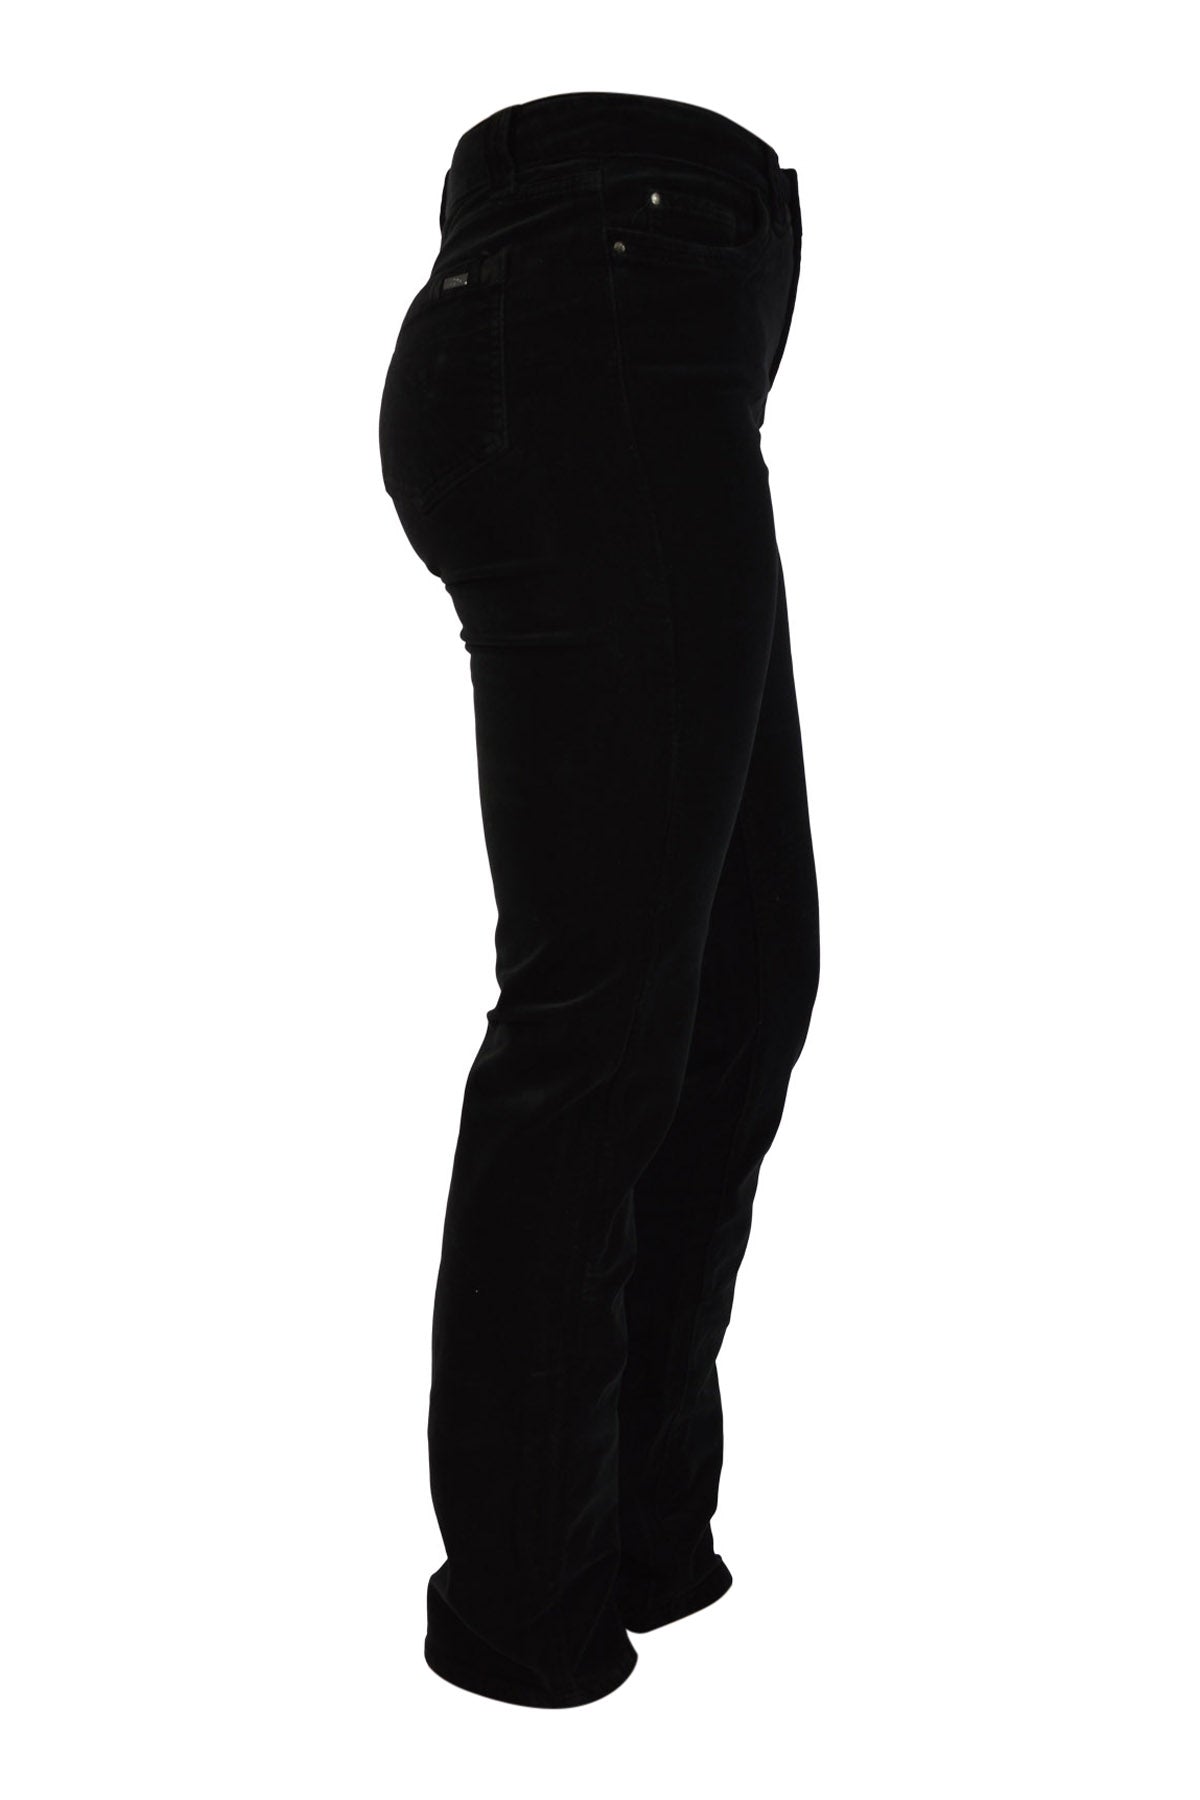 Jonny Q jeans Catherine X-fit velvet stretch P682AC, Black